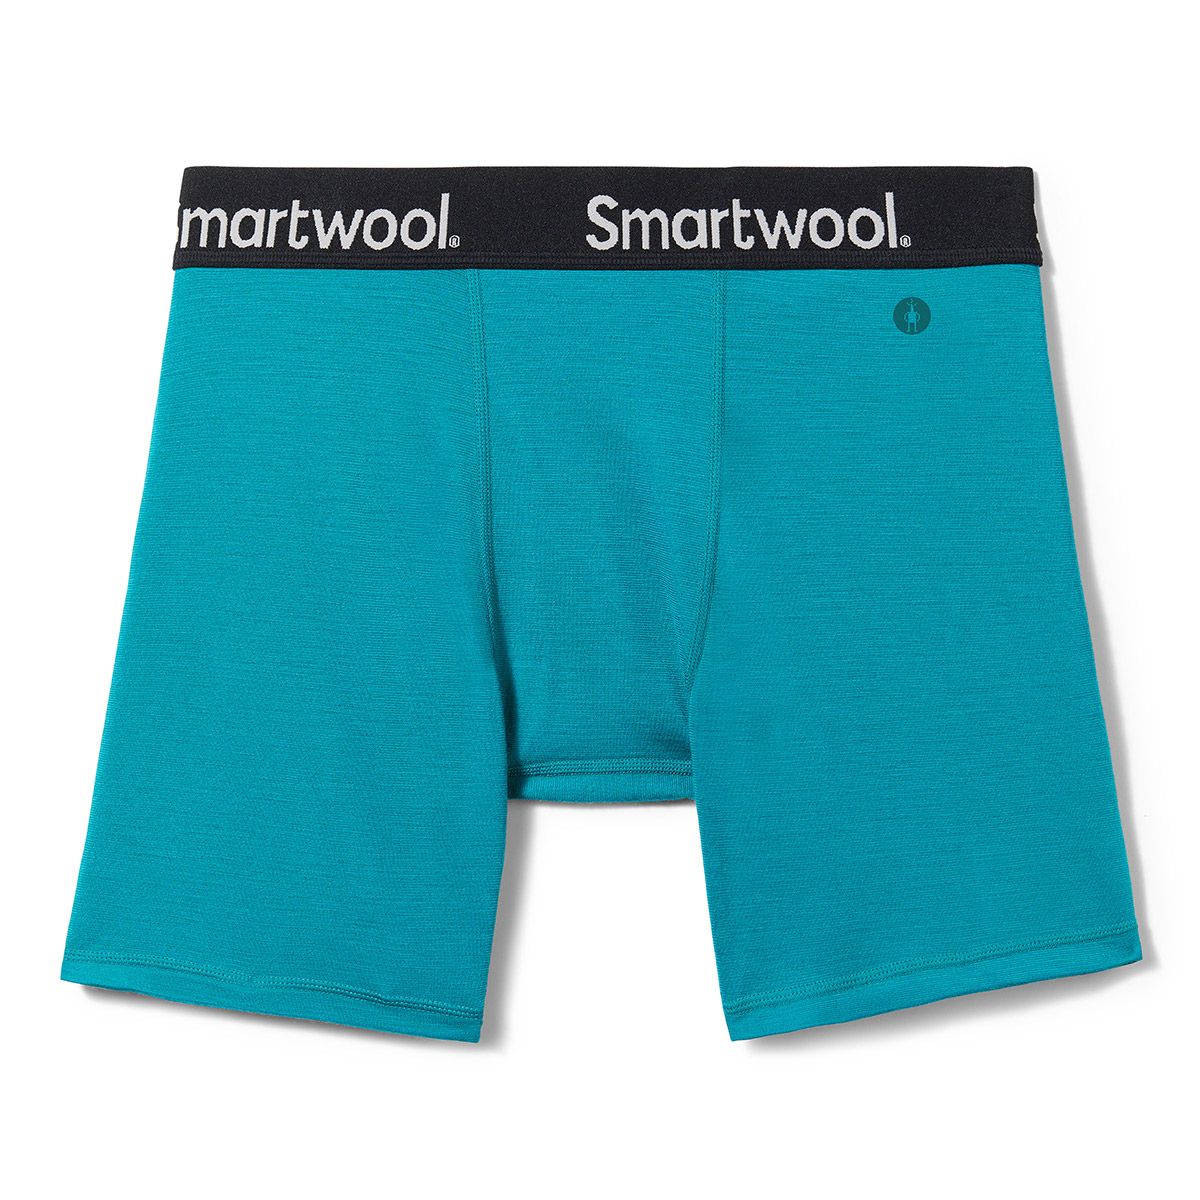 Smartwool Boxer Brief - Men's